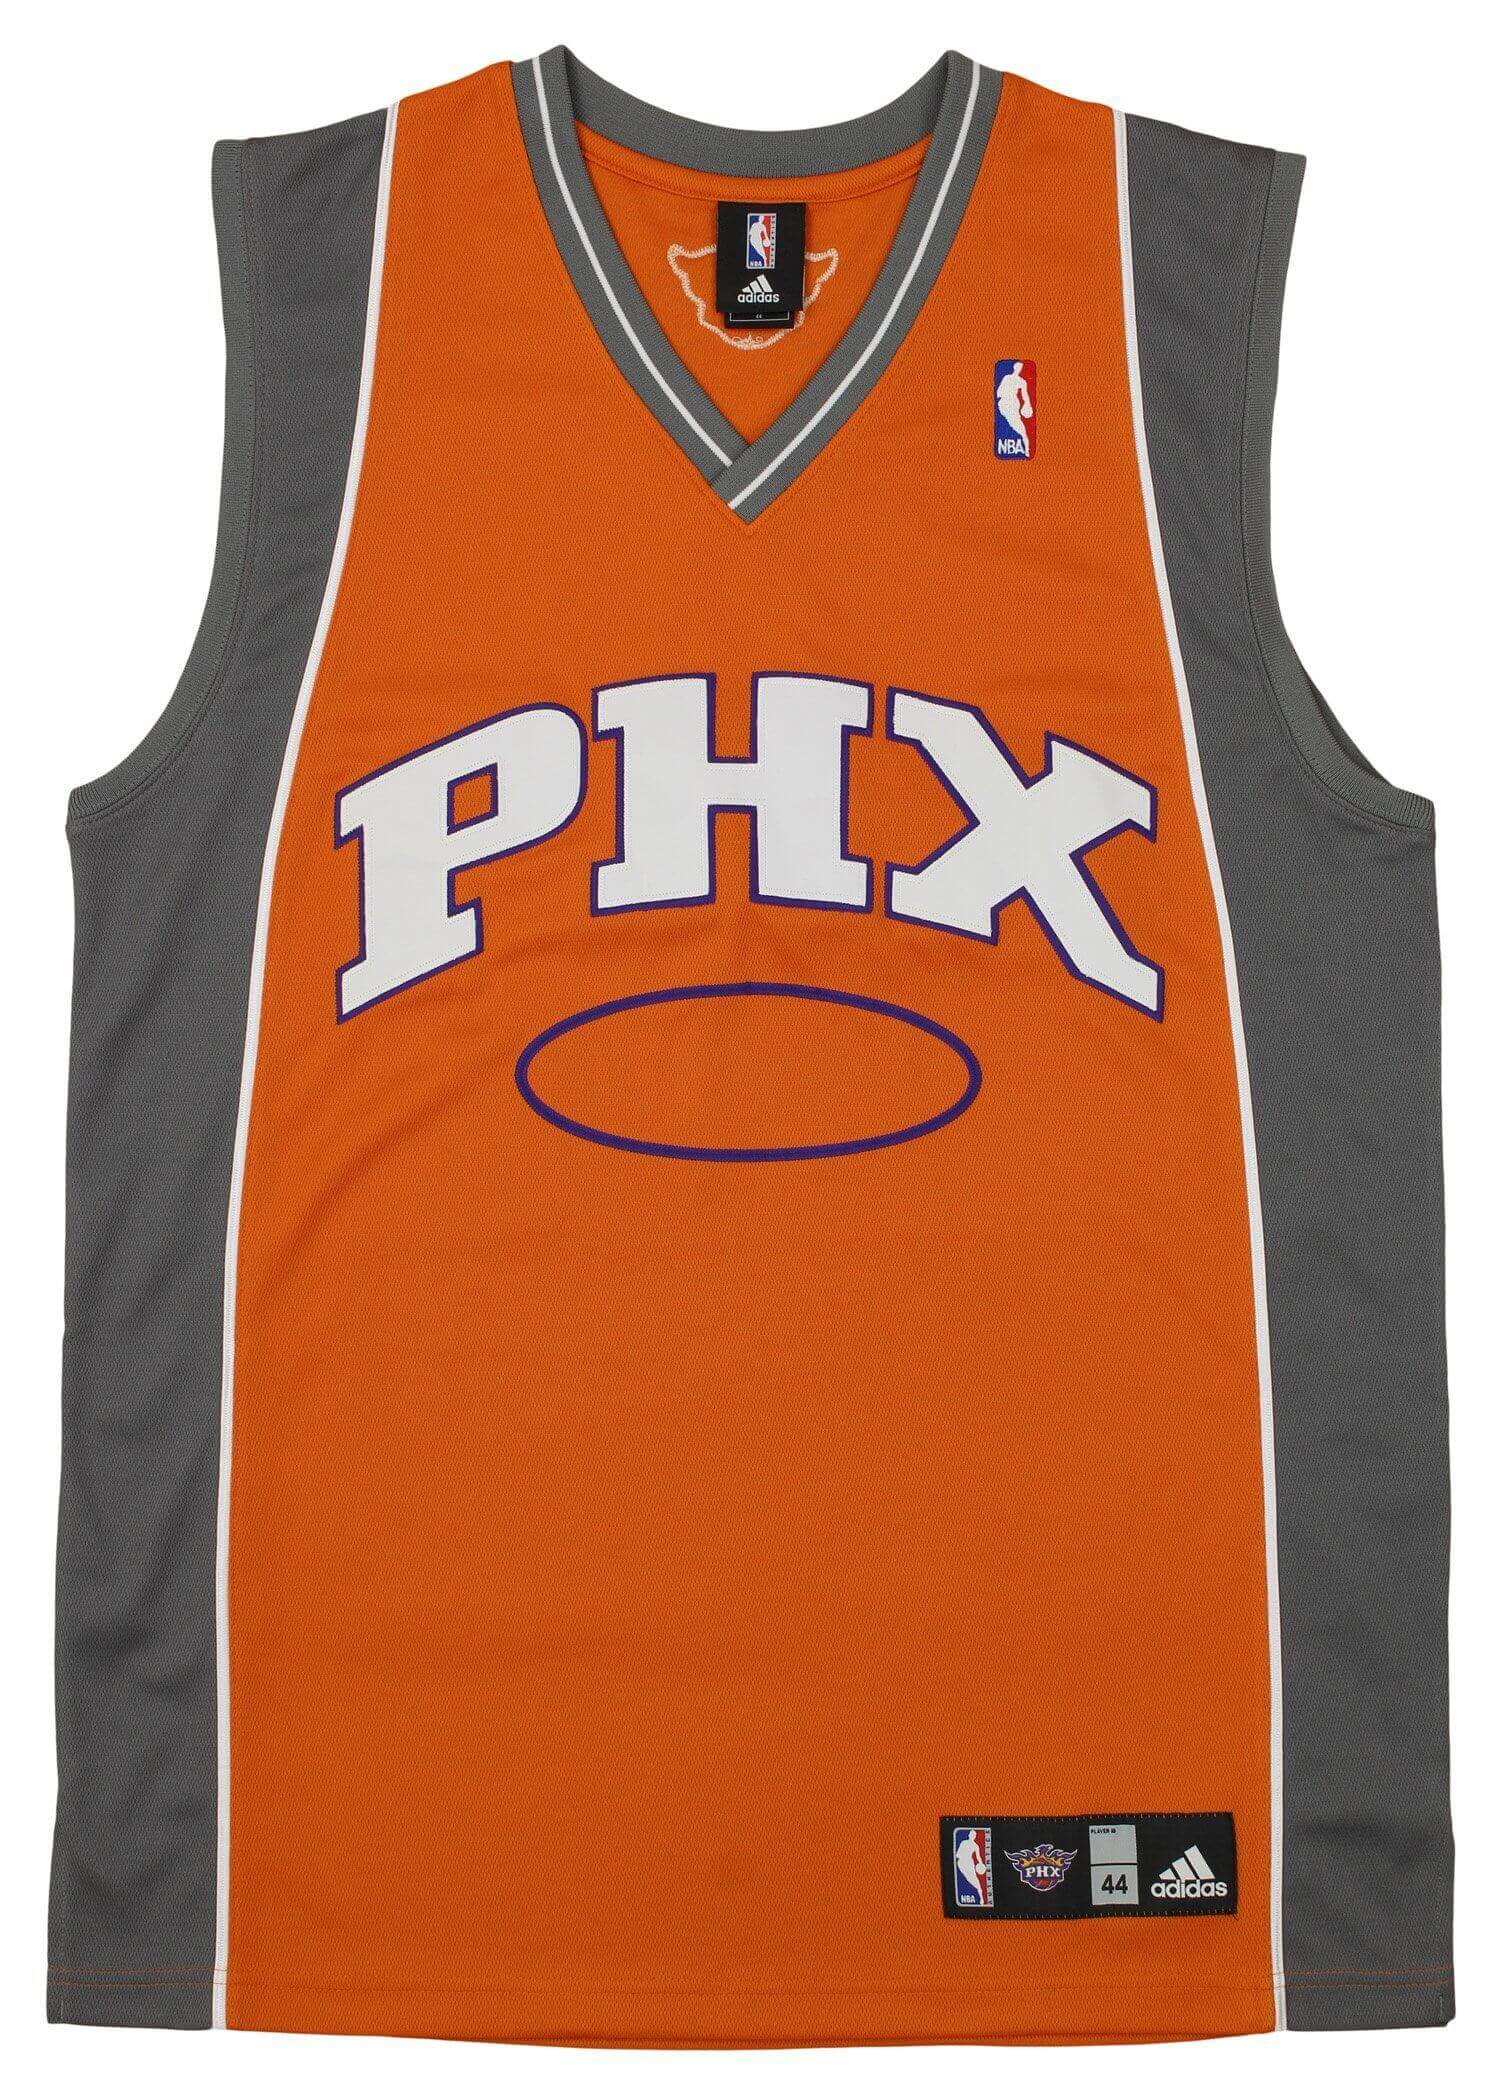 Phoenix Suns Adidas jerseys, Orange and Purple, sz Small, Devin